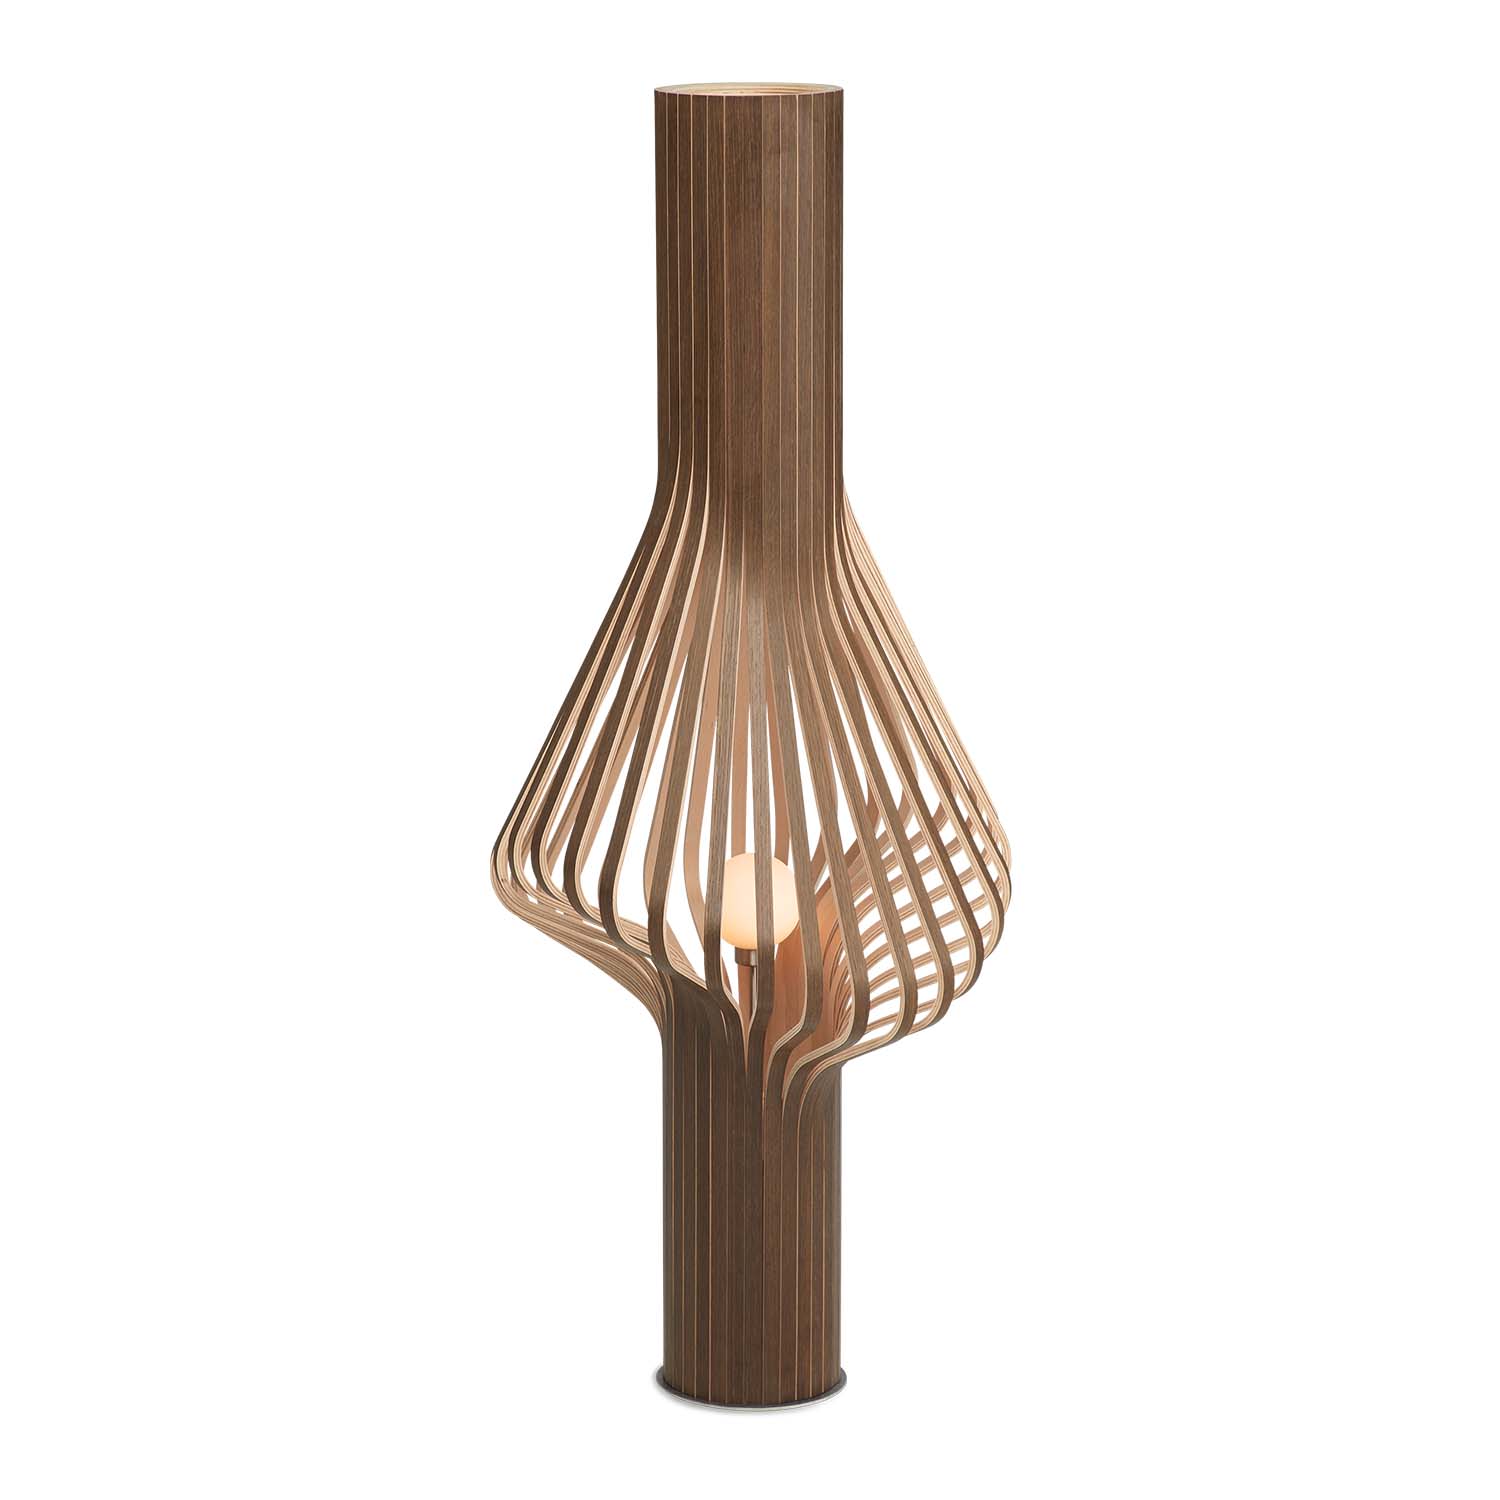 DIVA - Designer and artisanal wooden floor lamp, handcrafted